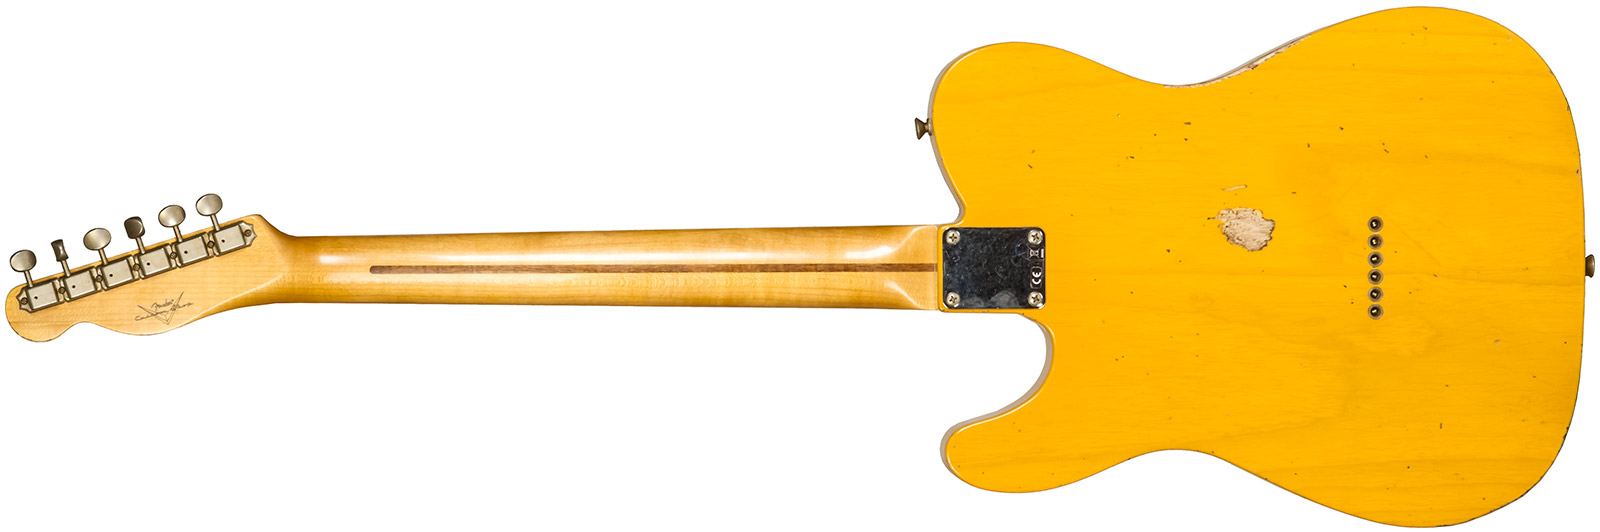 Fender Custom Shop Tele 1952 2s Ht Mn #r135090 - Relic Aged Butterscotch Blonde - Tel shape electric guitar - Variation 1